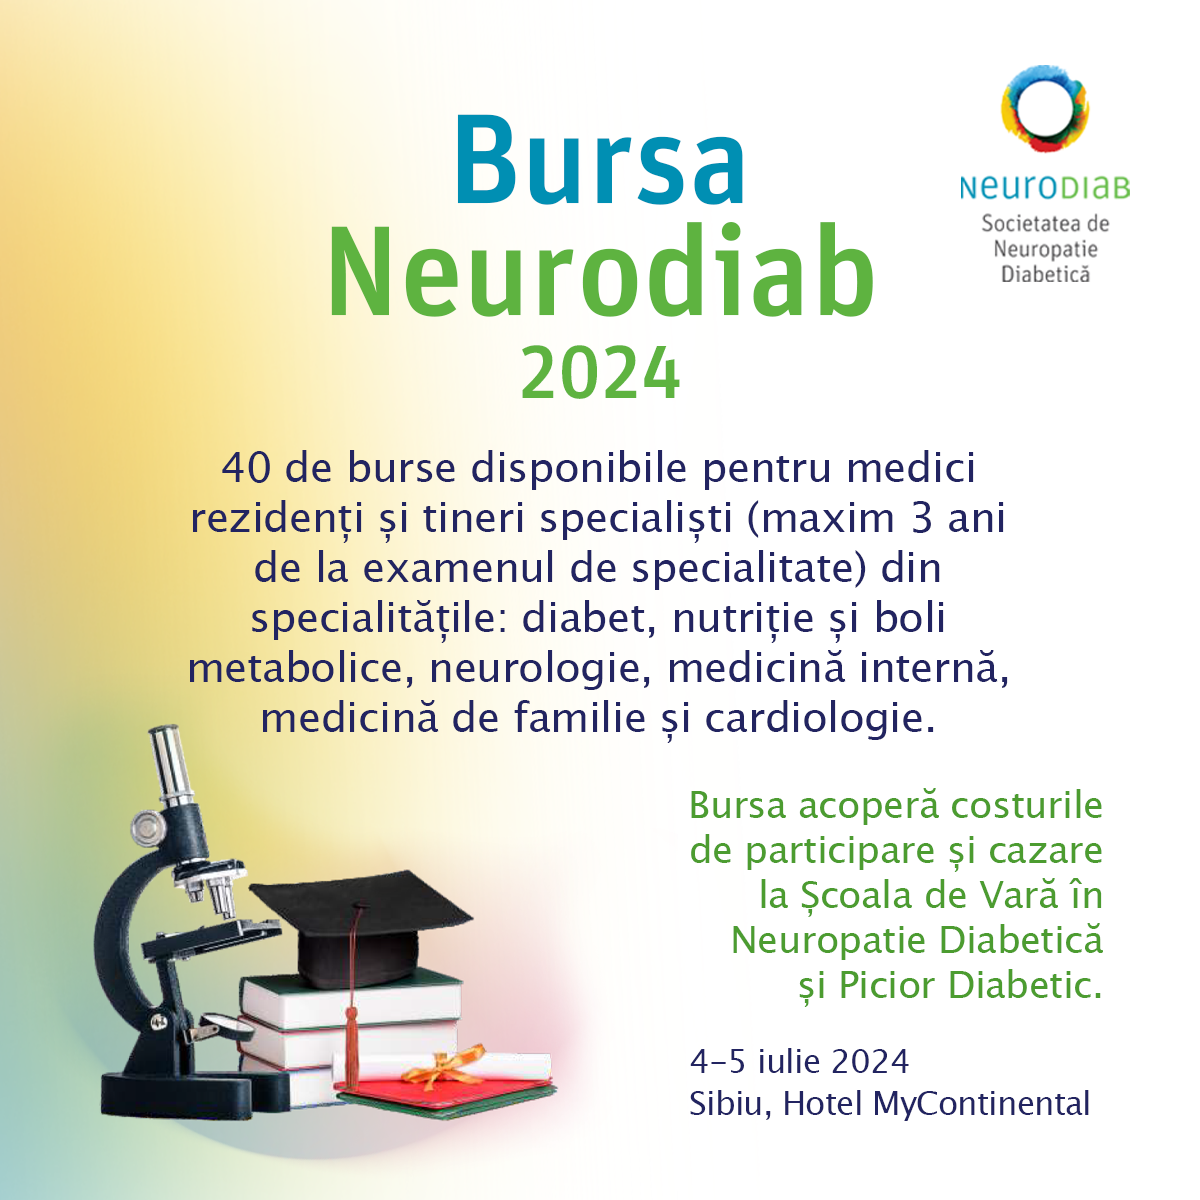 Bursa Neurodiab 2024